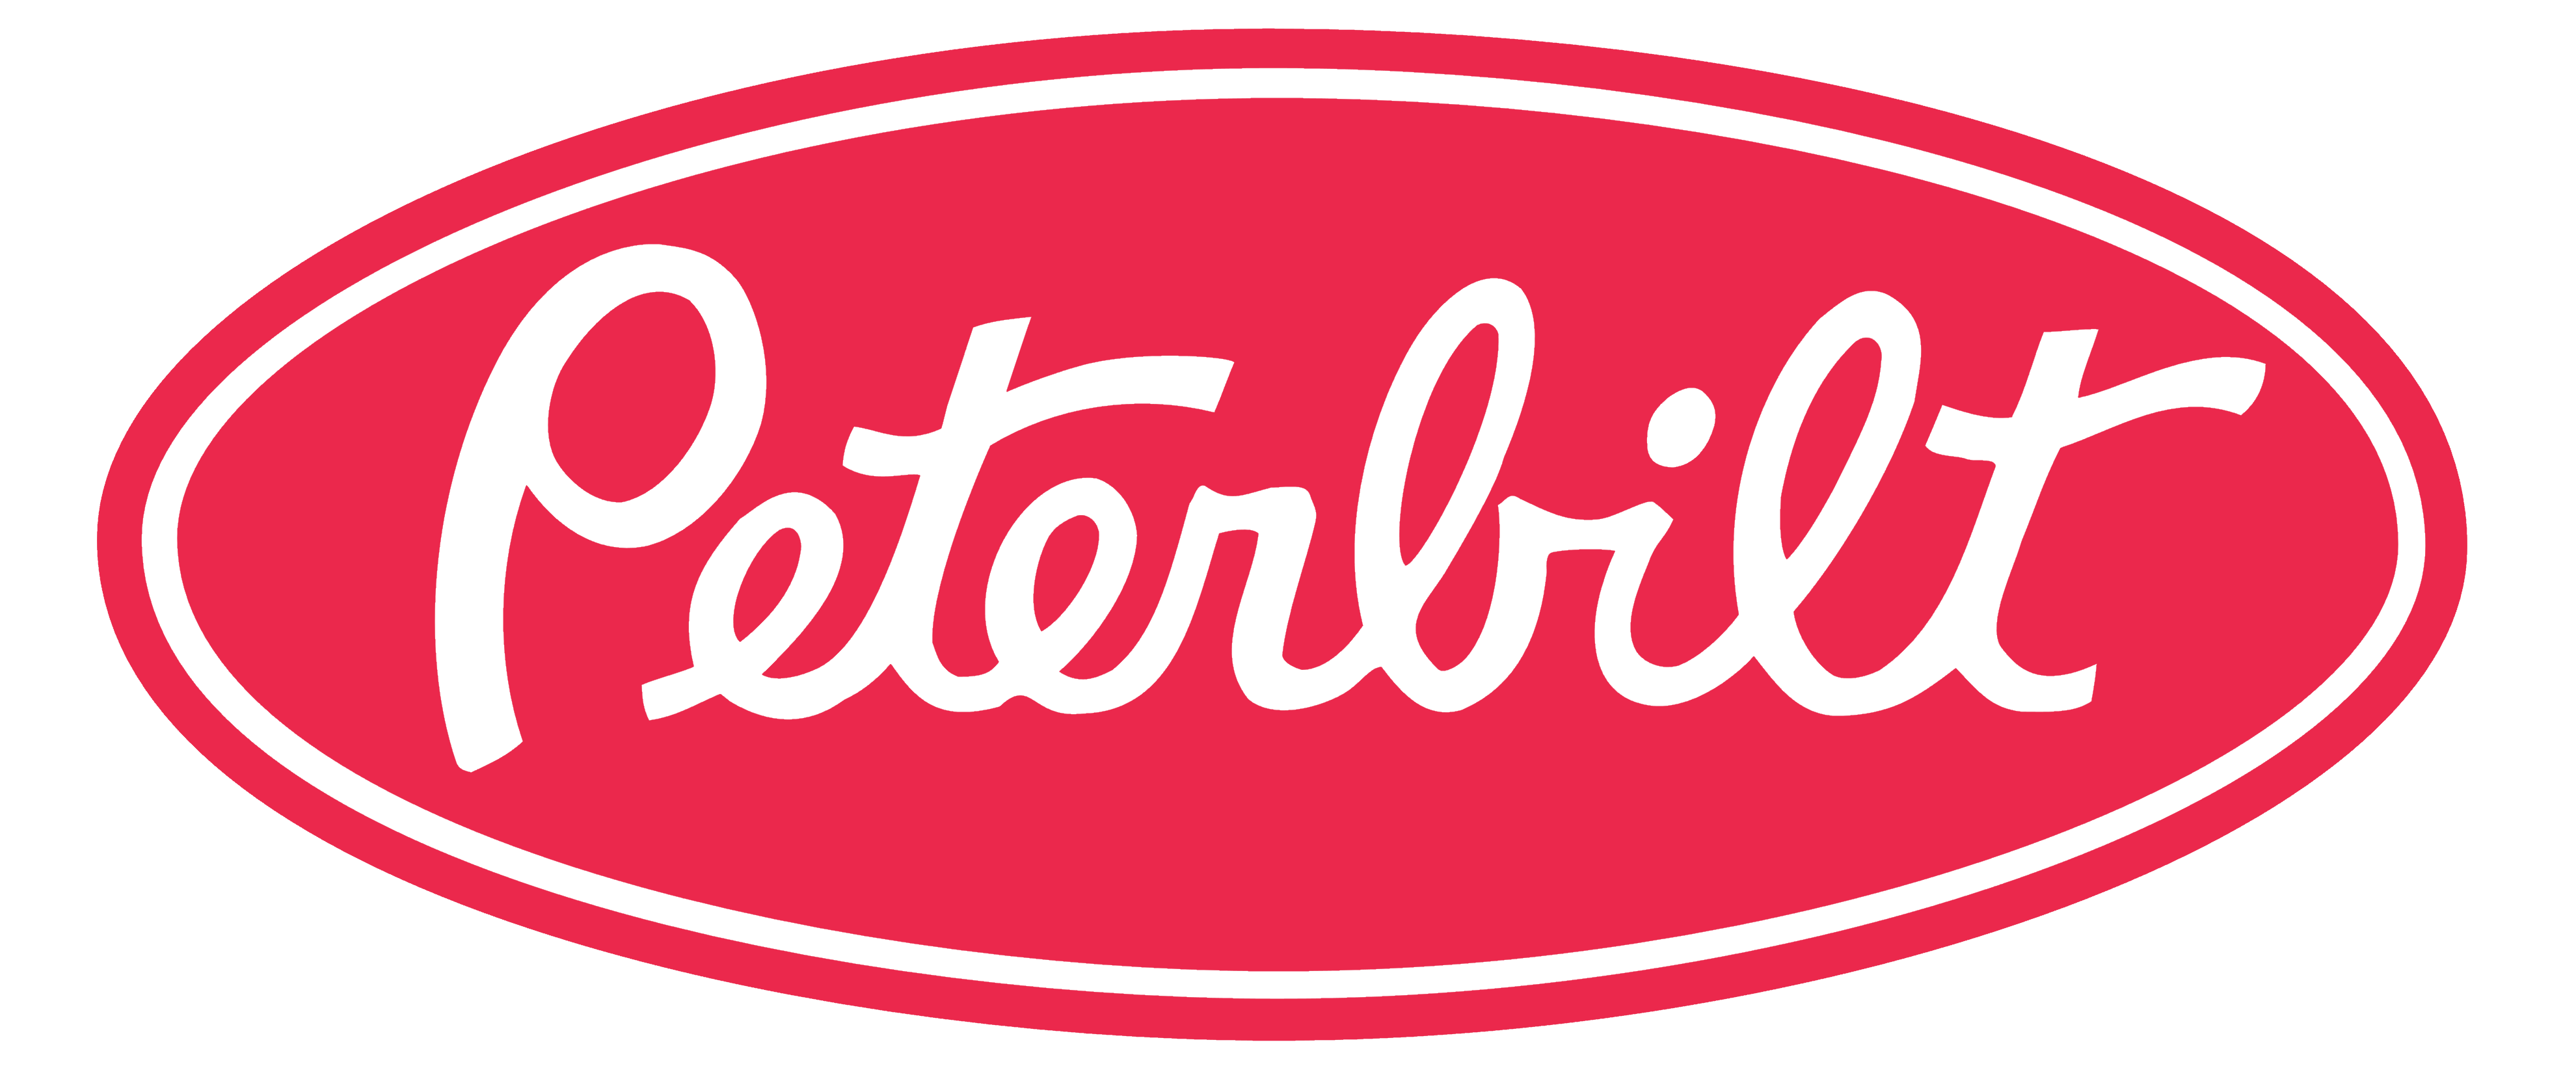 Peterbilt - Logos Download